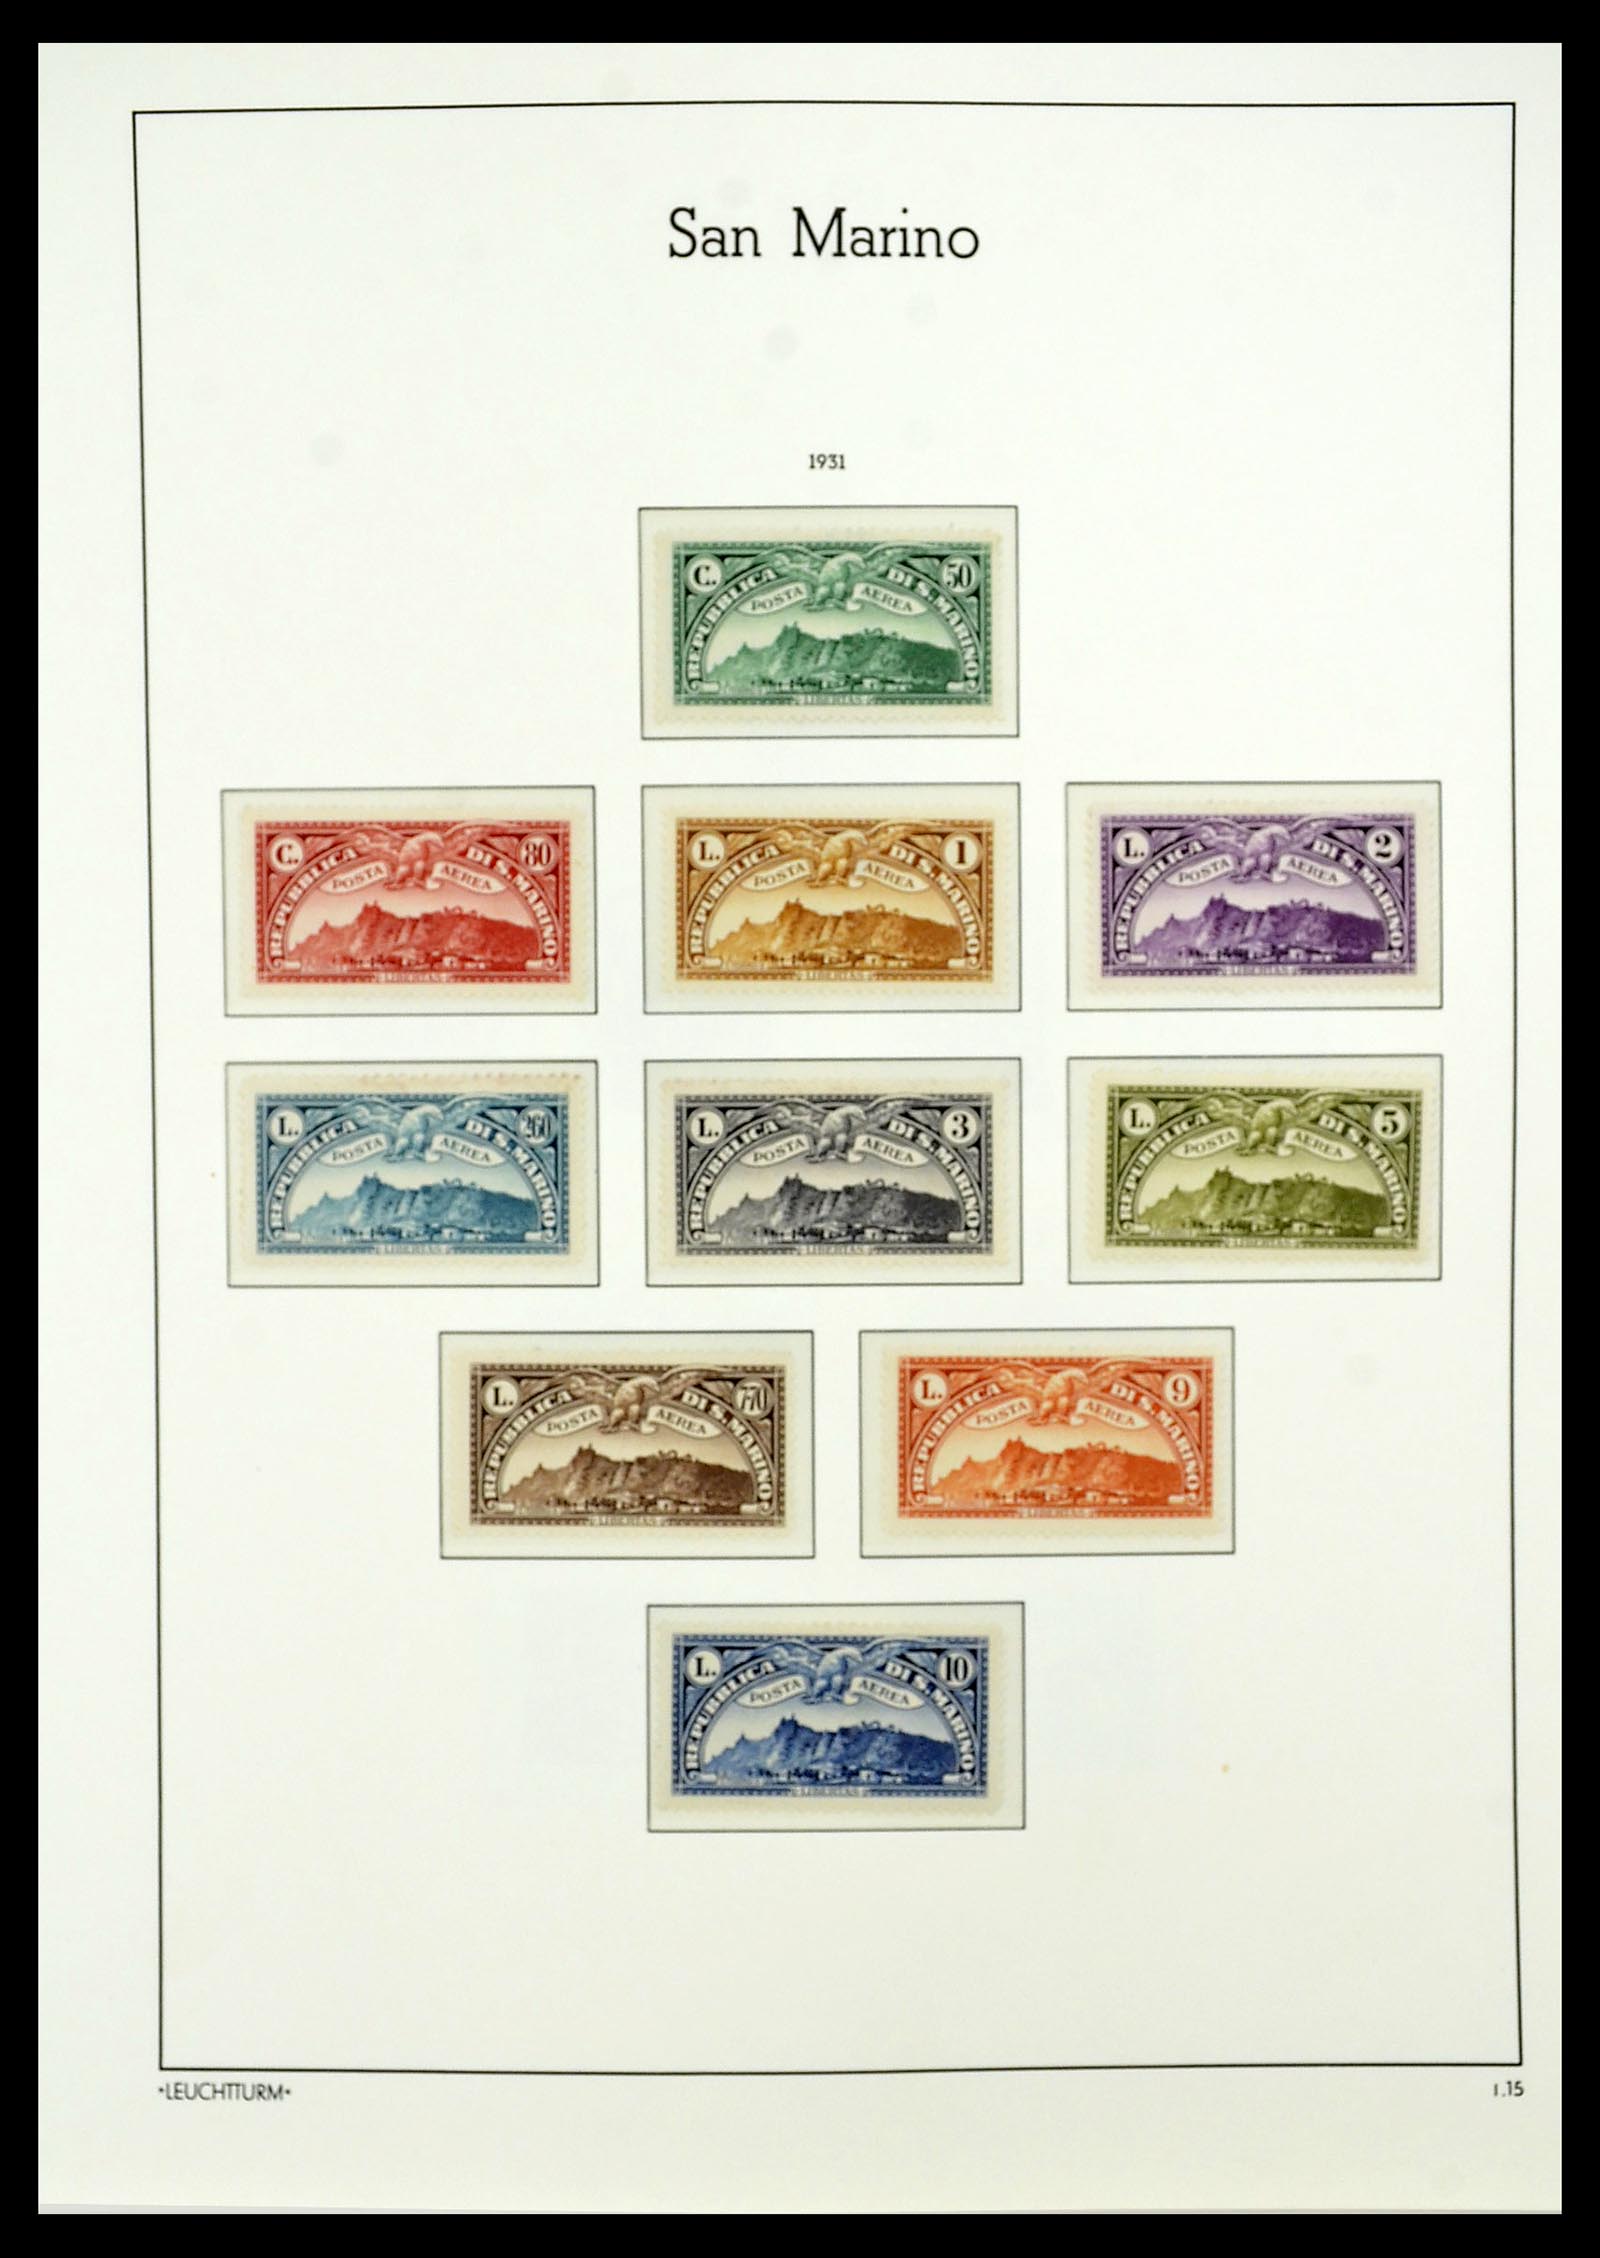 34243 015 - Stamp collection 34243 San Marino 1877-2008.